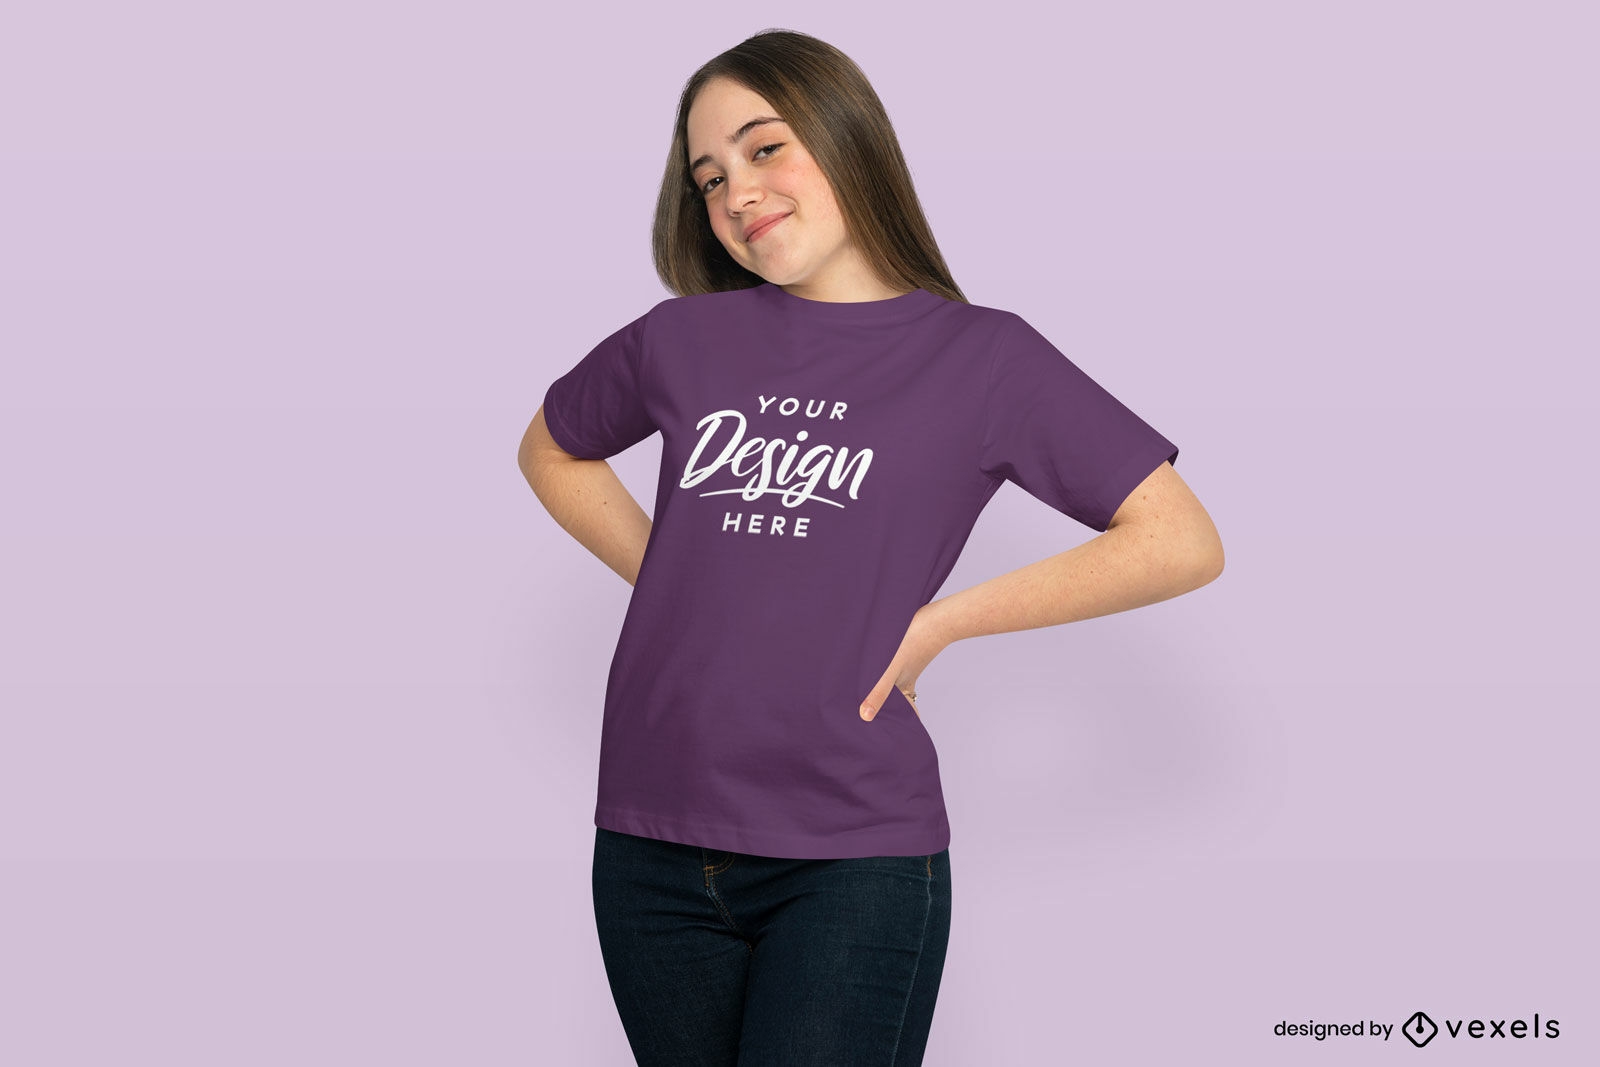 Teenager-M?dchen l?chelnd T-Shirt Mockup-Design